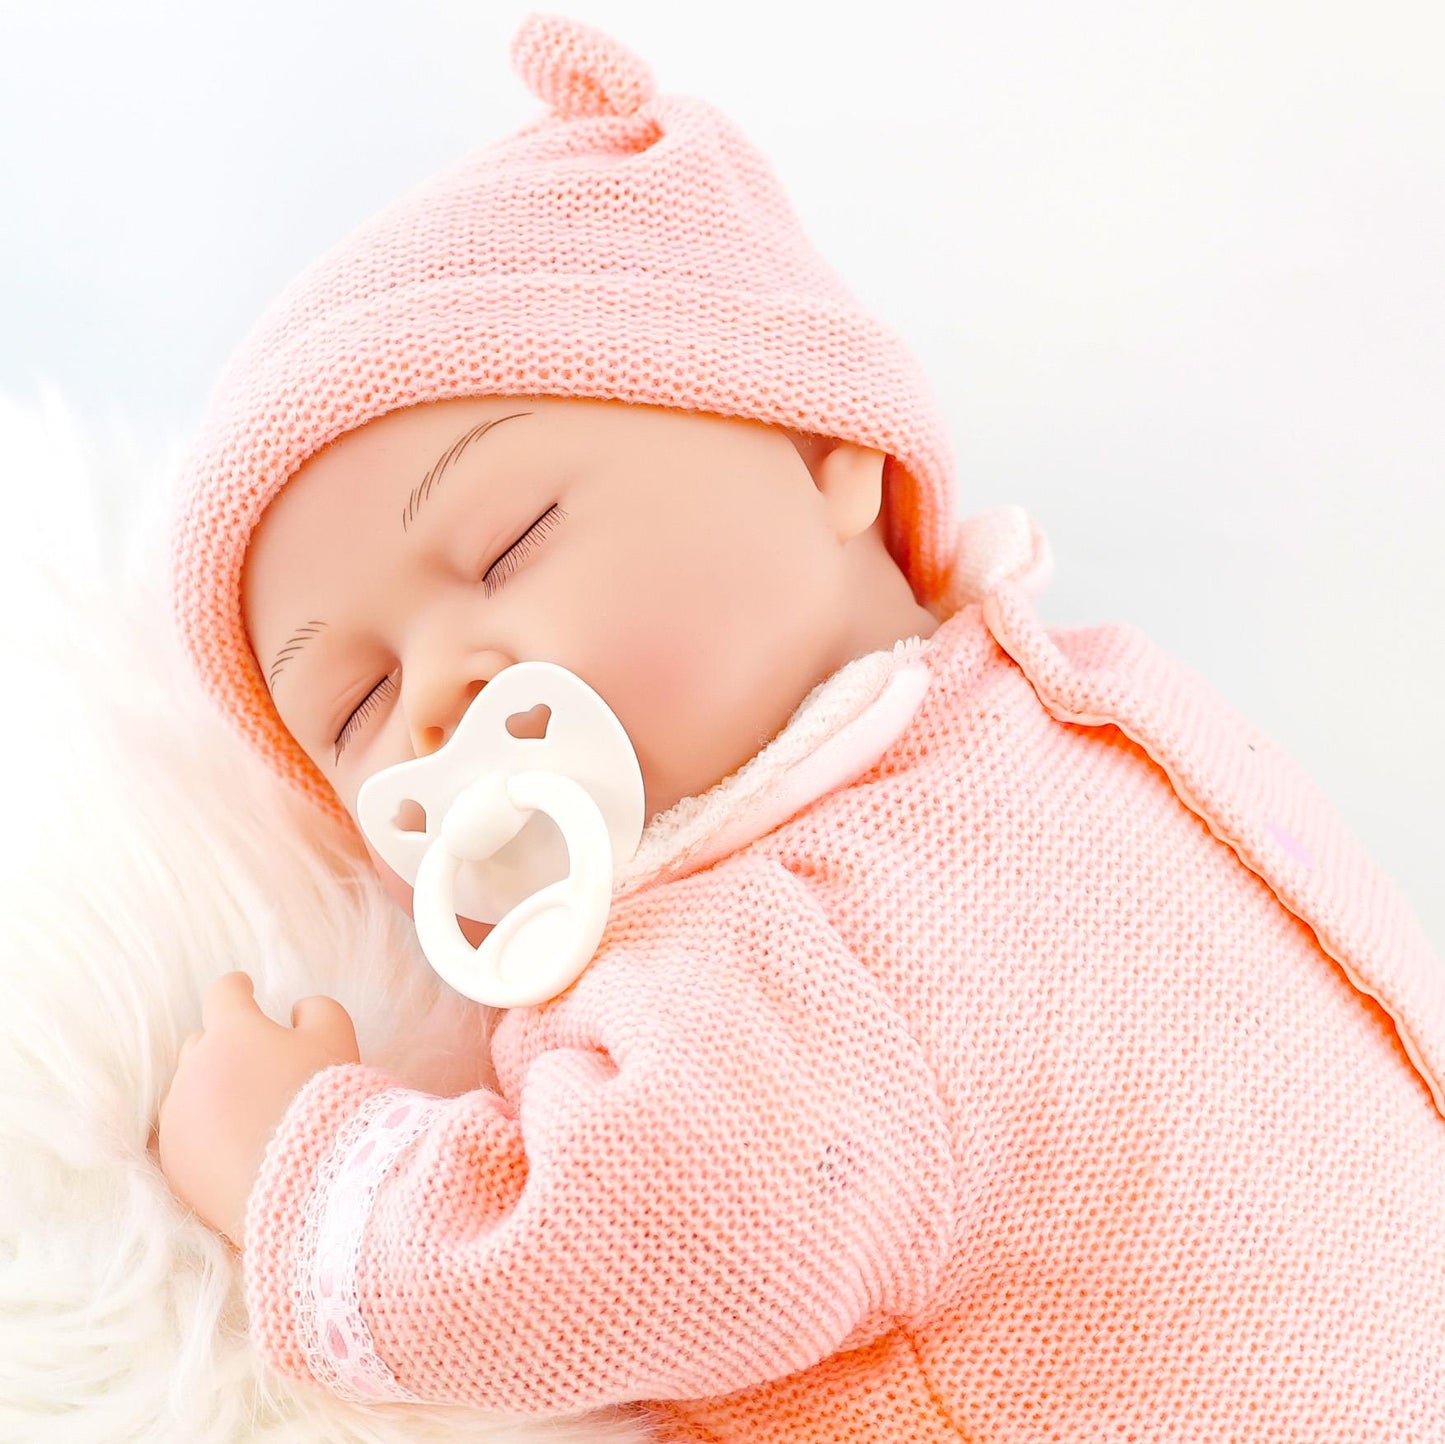 Reborn Sleeping Baby Girl Doll by BiBi Doll - UKBuyZone